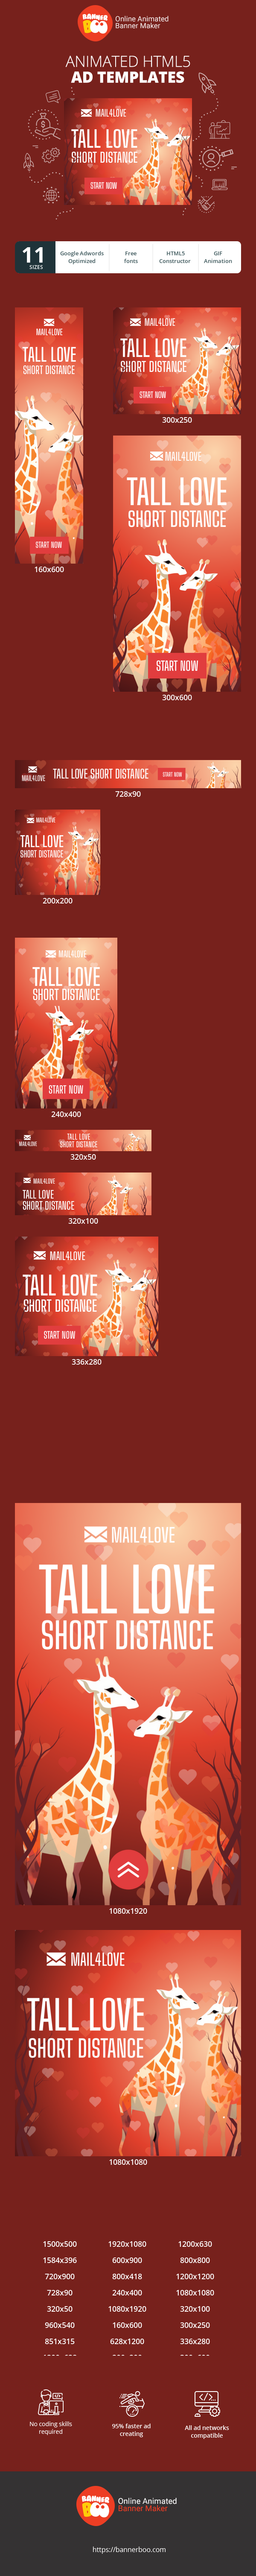 Szablon reklamy banerowej — Tall Love Short Distance — Valentine's Day